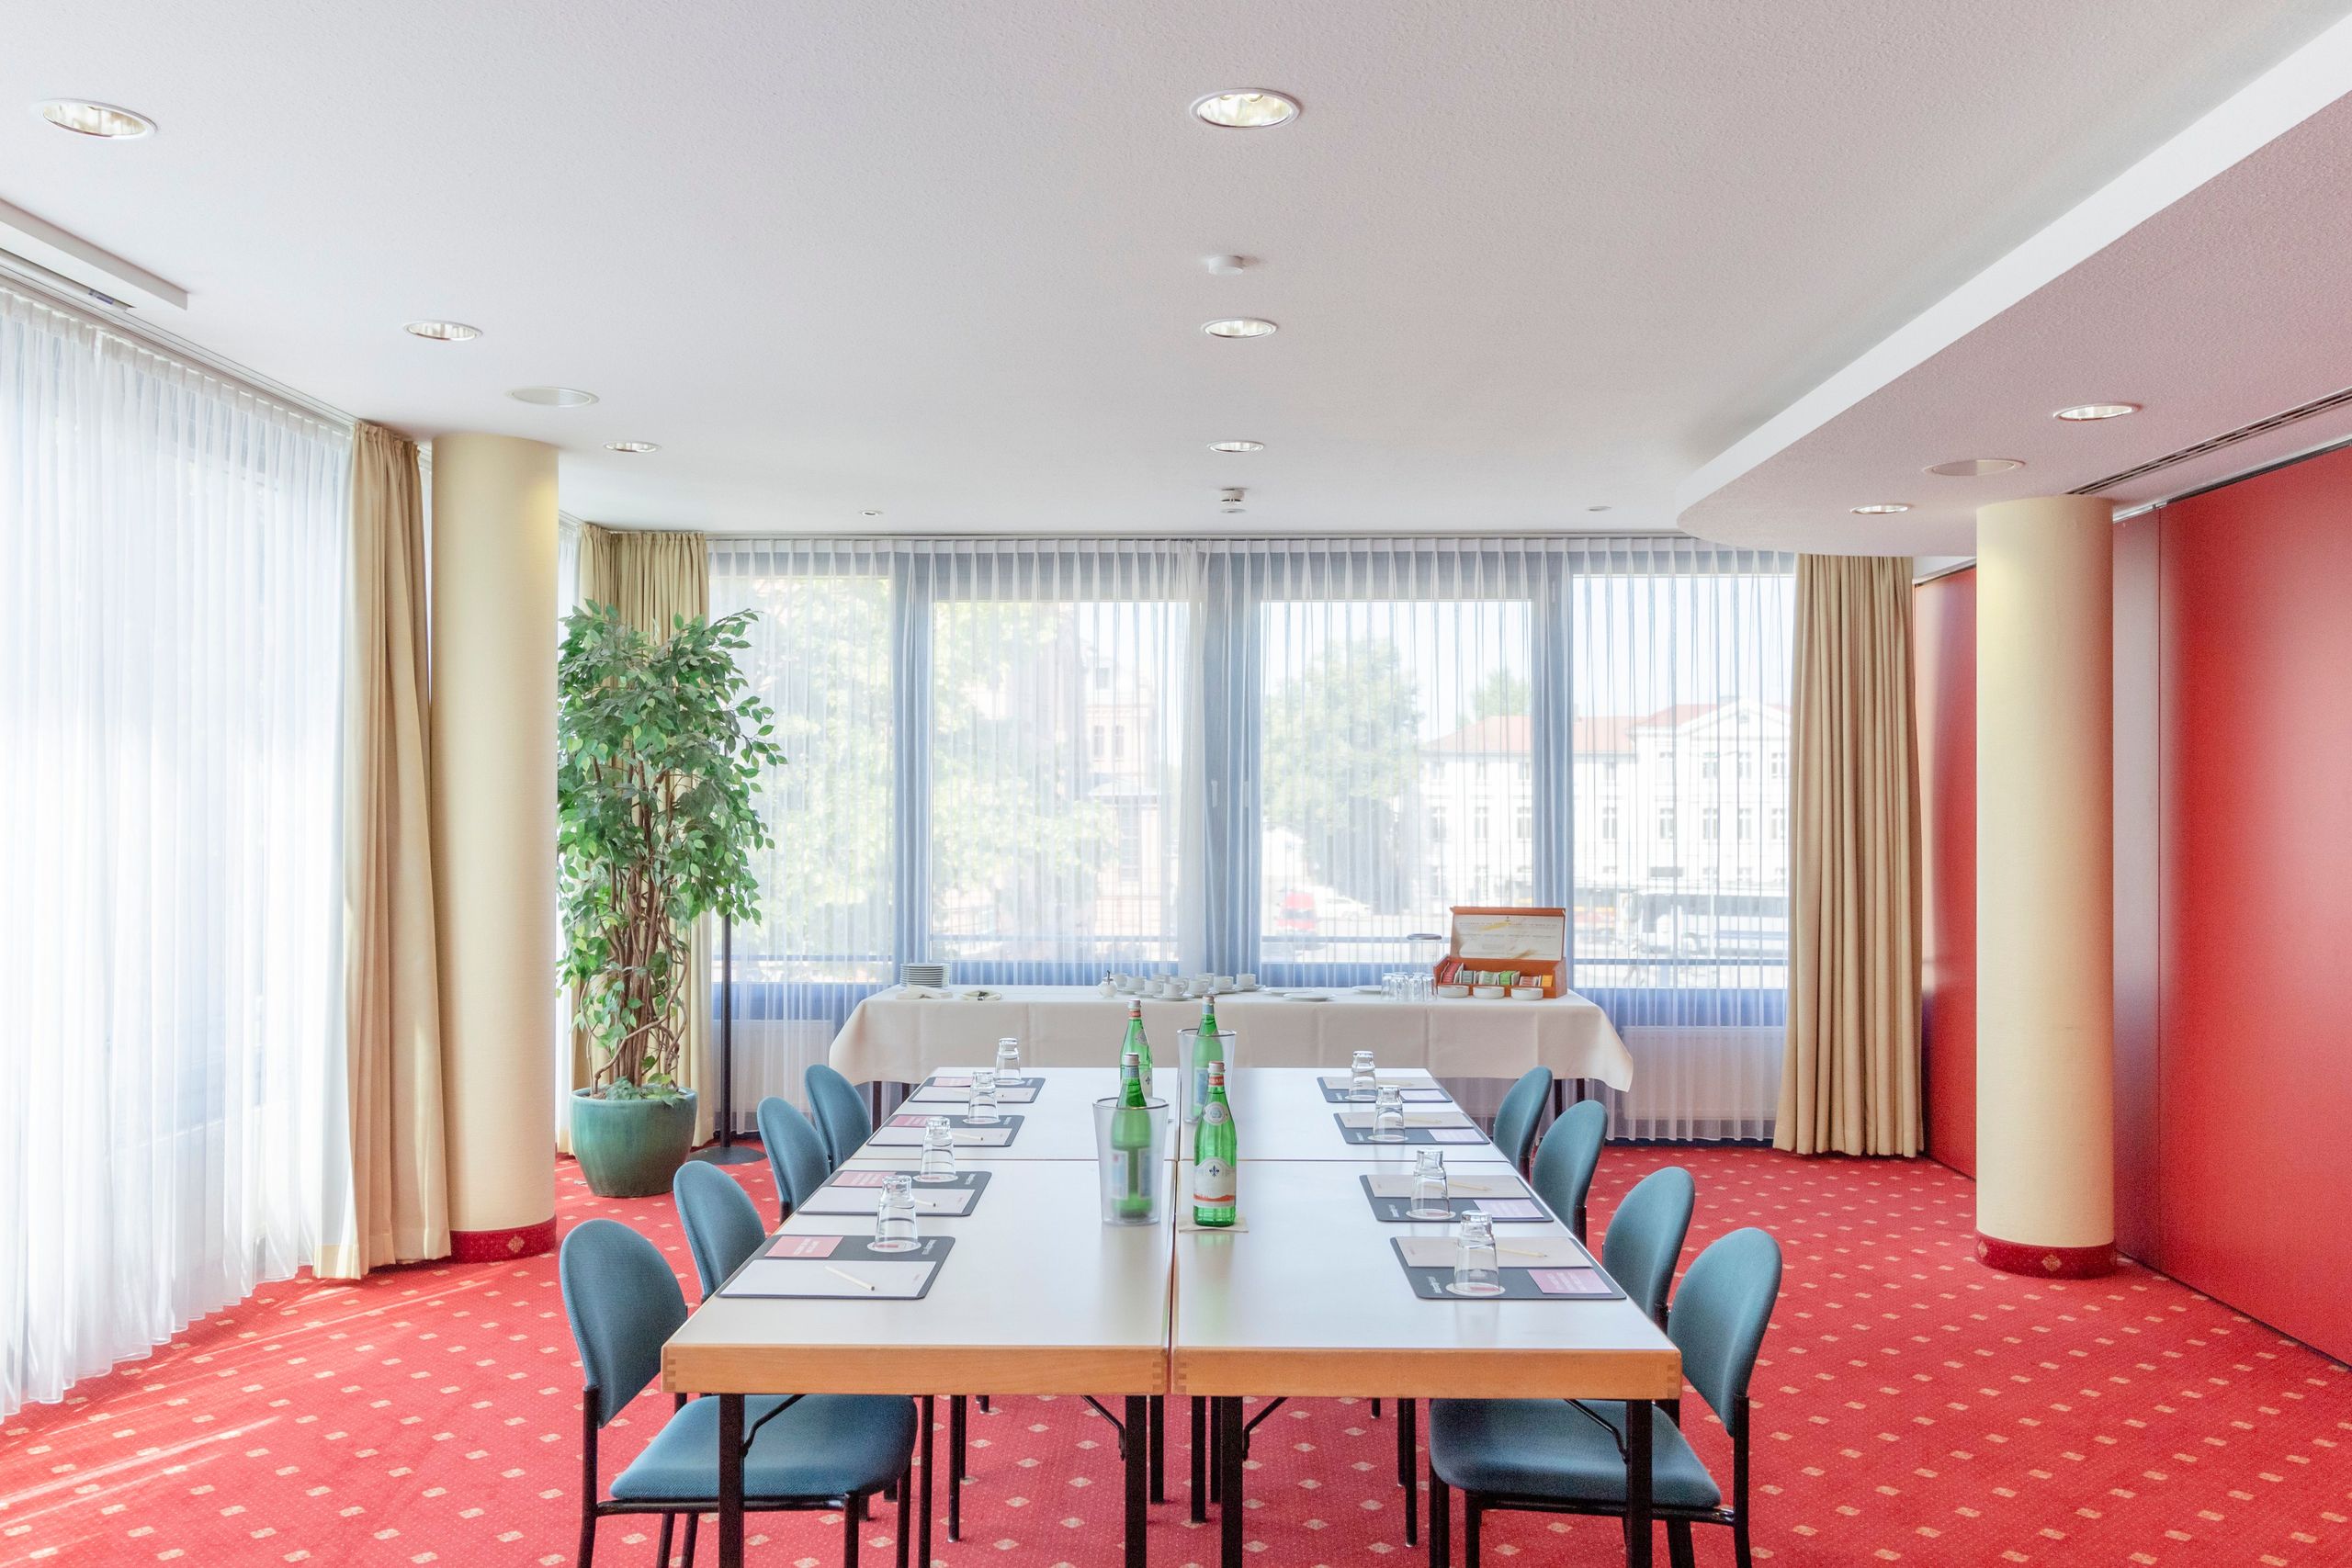 IntercityHotel Schwerin - Meetings